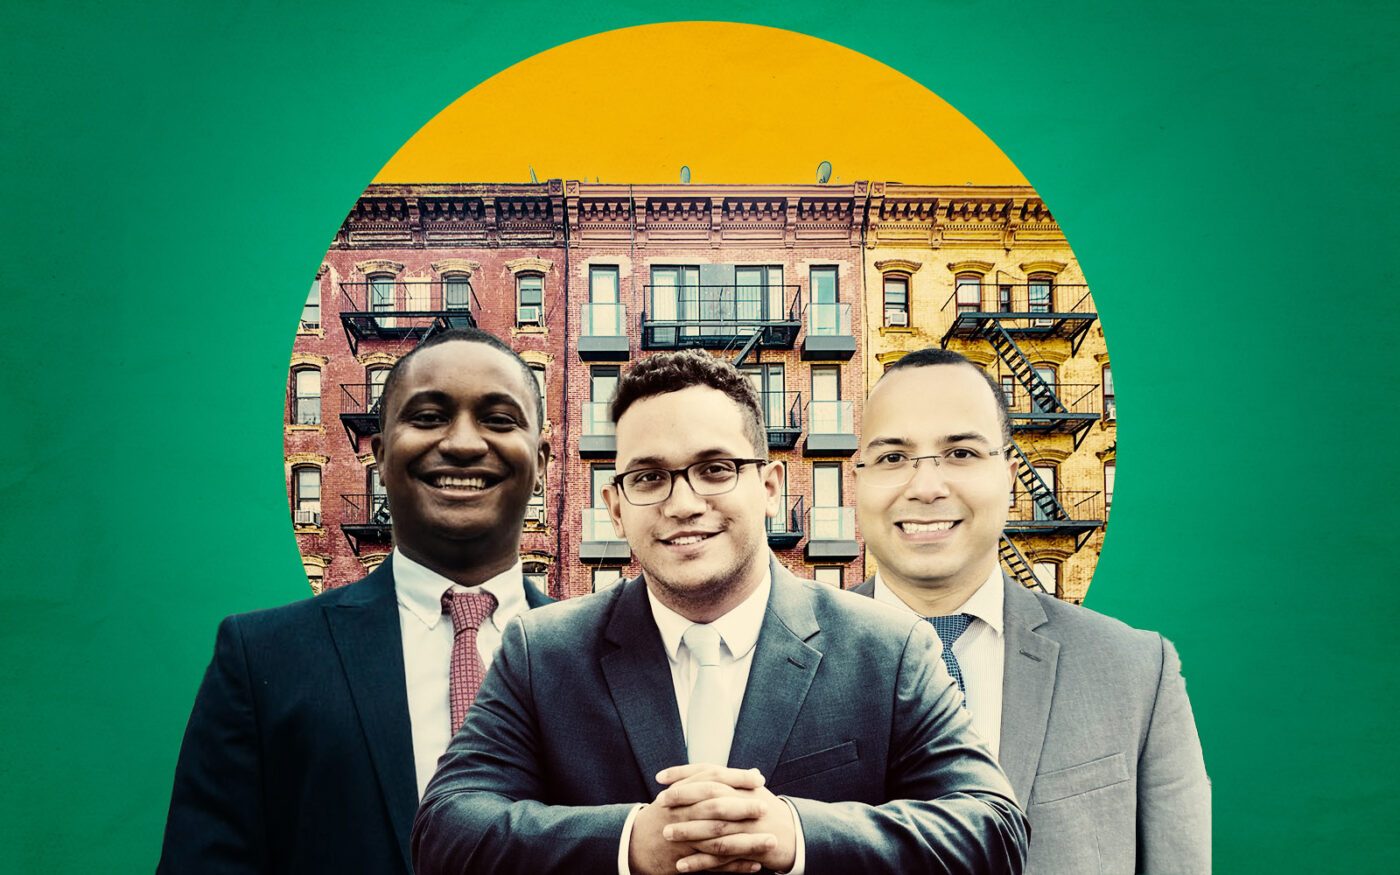 New York City Council Member's Chi Ossé, Shaun Abreu and Oswald Feliz (New York City Council, Getty)